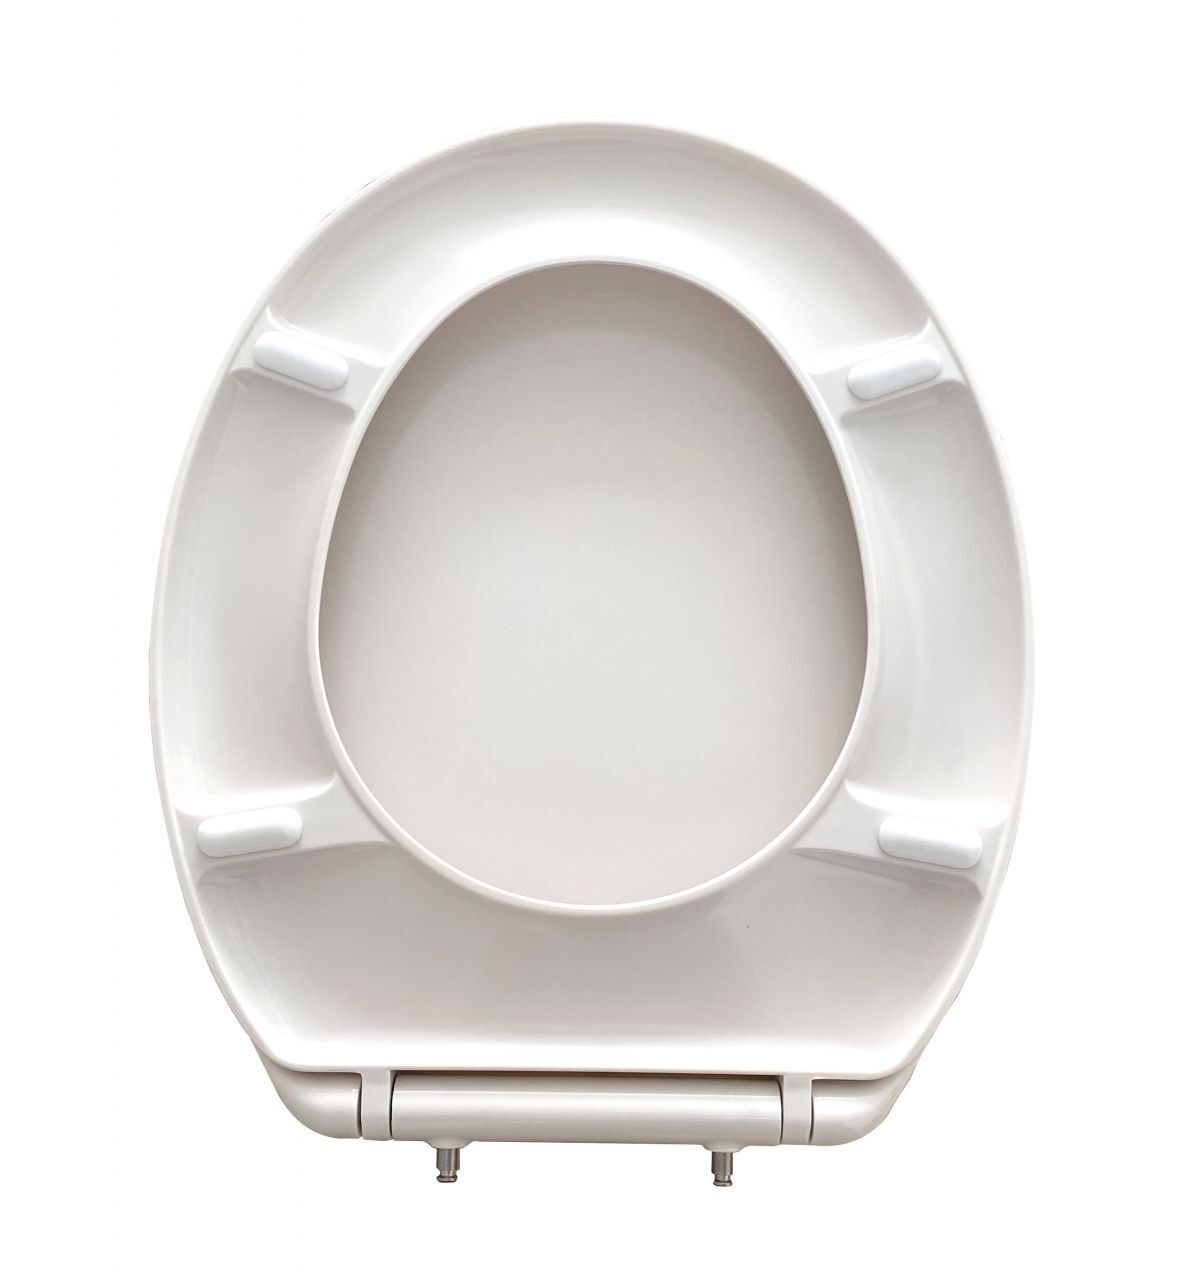 Primaster Toilettendeckel Pergamon Absenkautomatik Duroplast WC Sitz Klodeckel